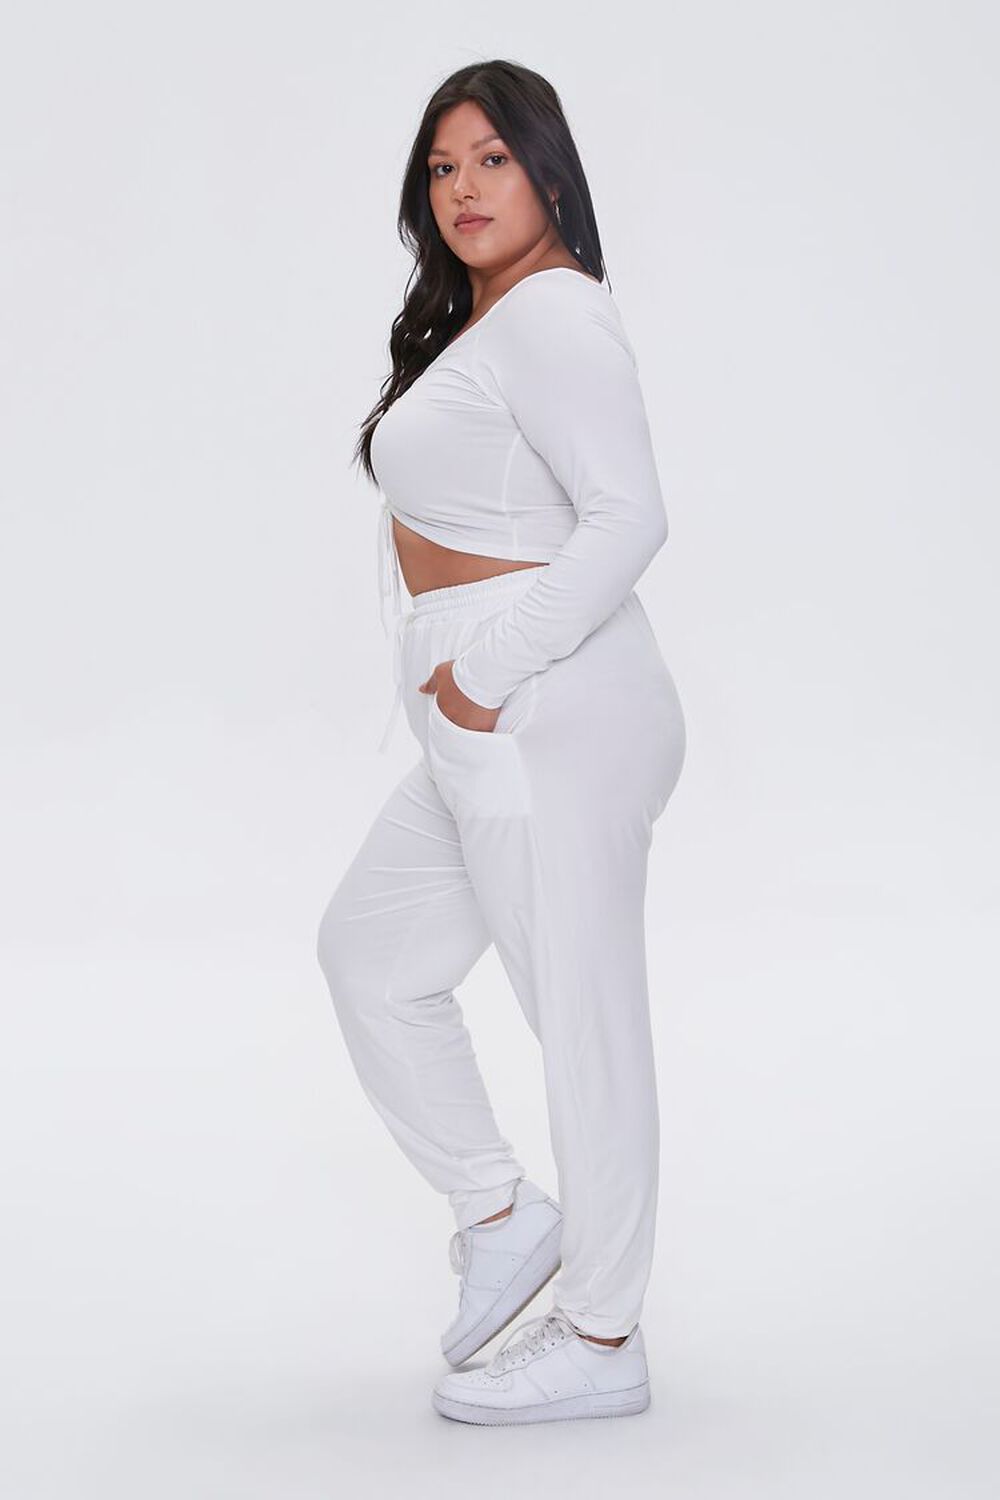 WHITE Plus Size Ruched Crop Top & Sweatpants Set, image 2